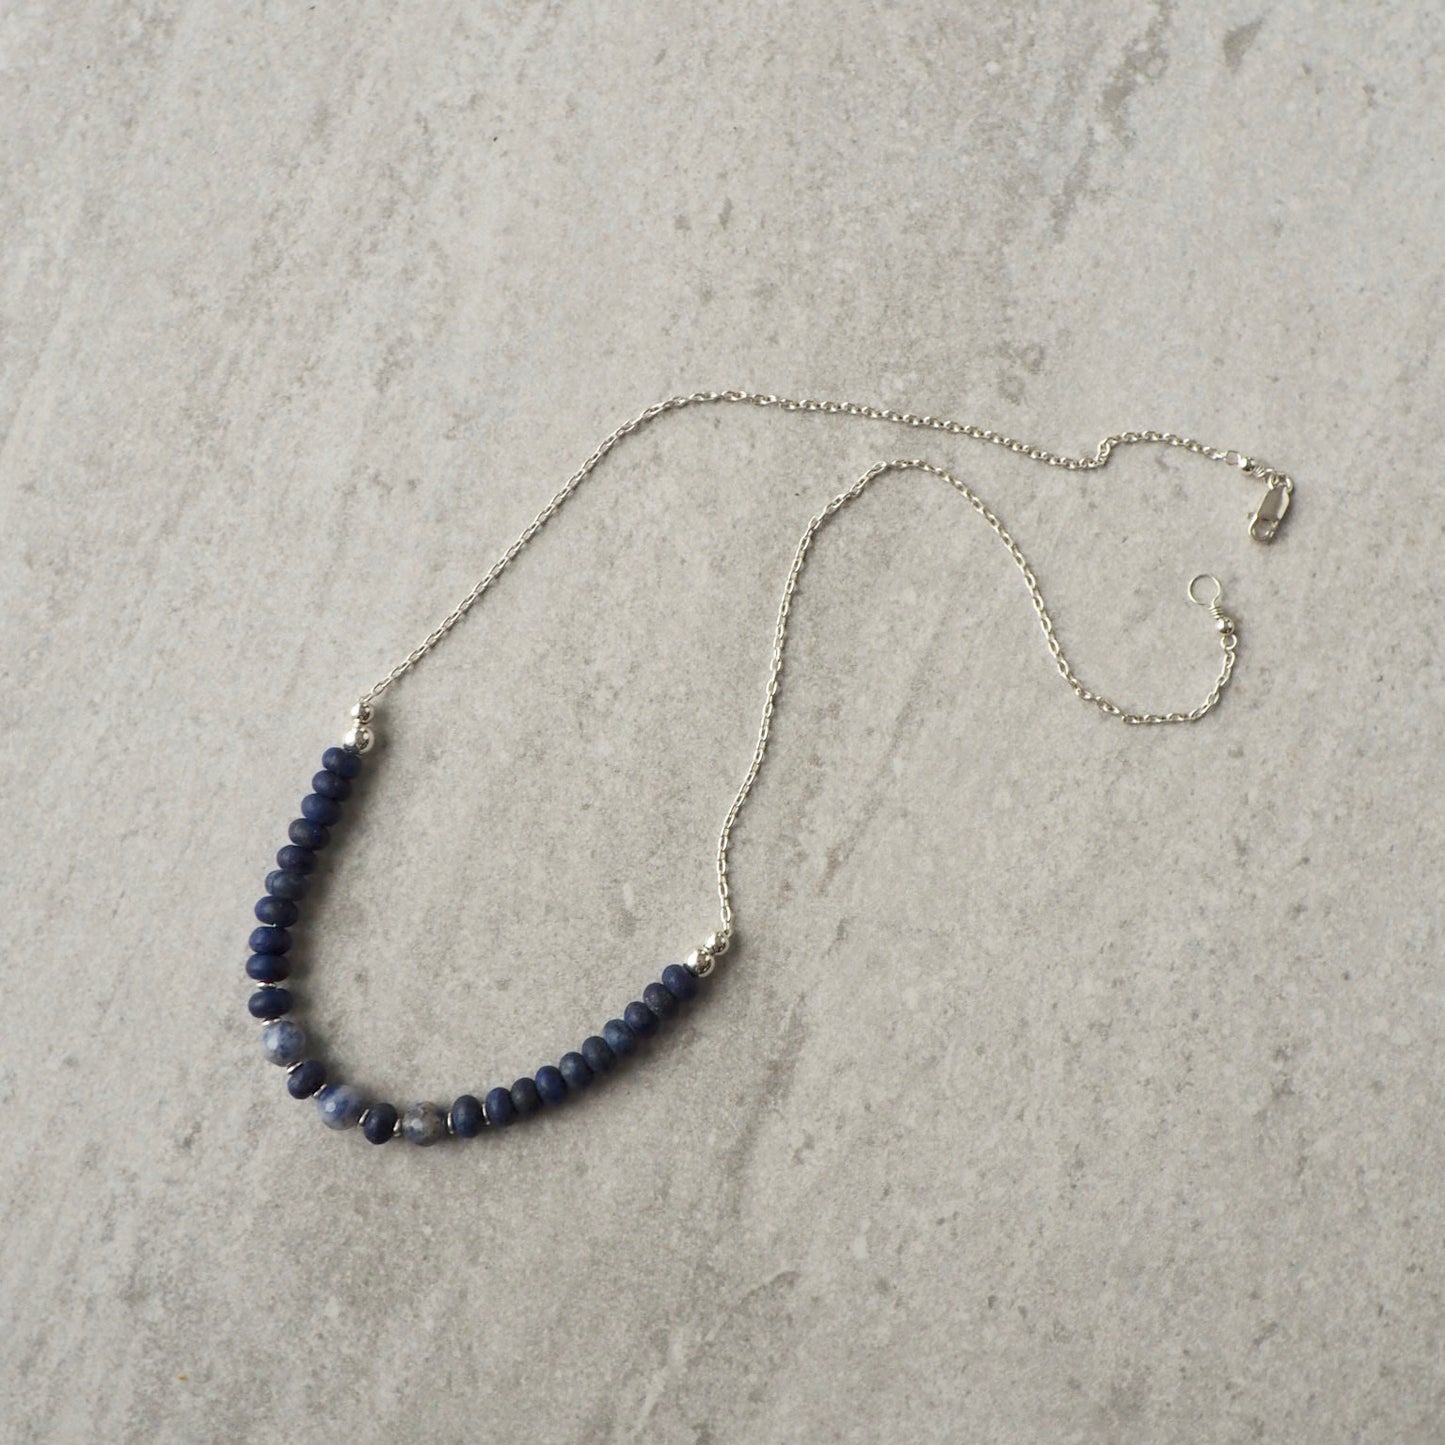 Lapis Lazuli and Blue Jasper Necklace by Wallis Designs